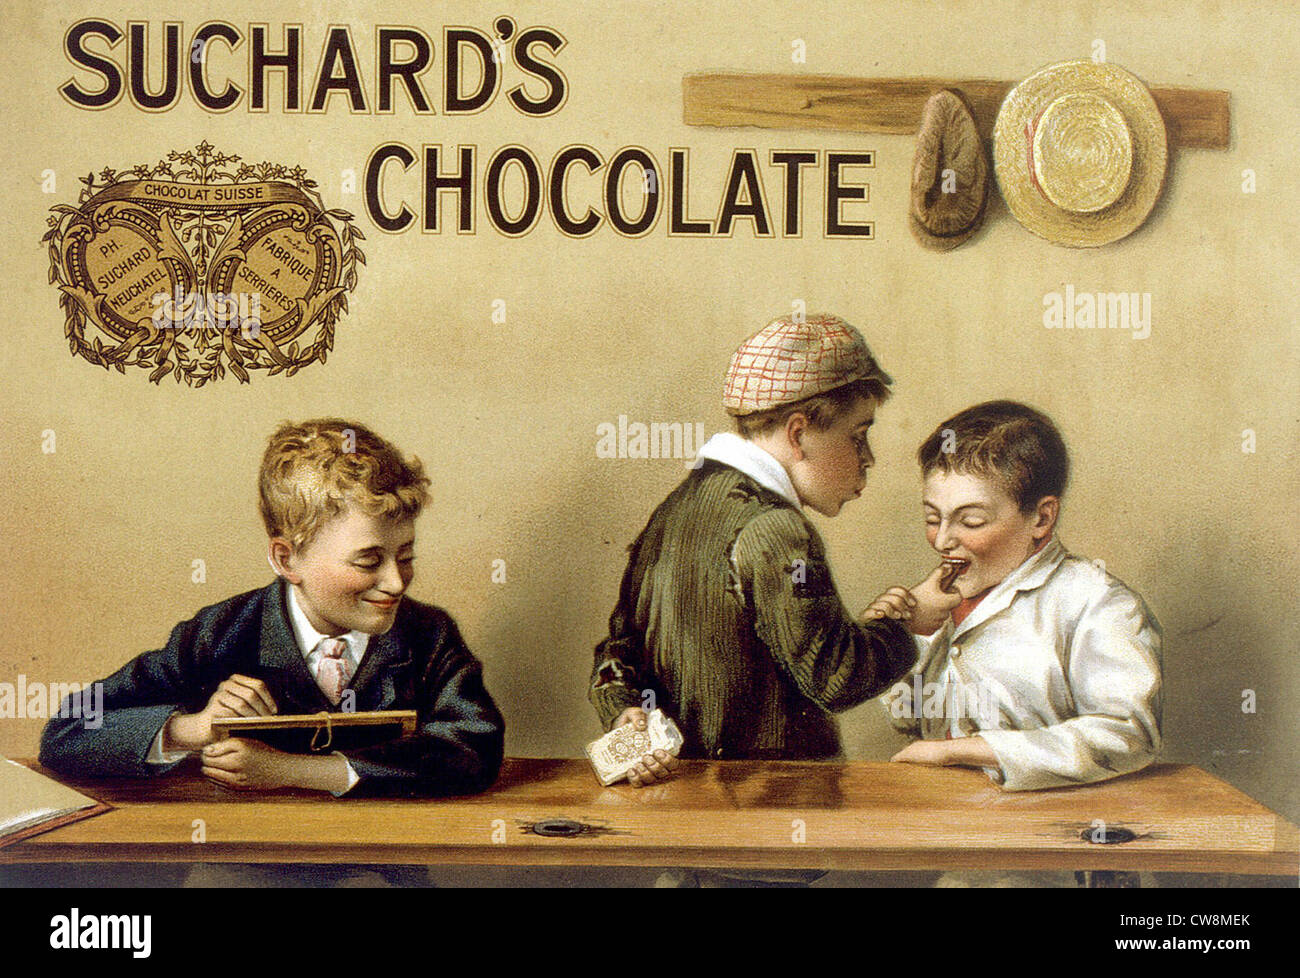 Suchard Chocolate, 19th century advertisement Stock Photo - Alamy